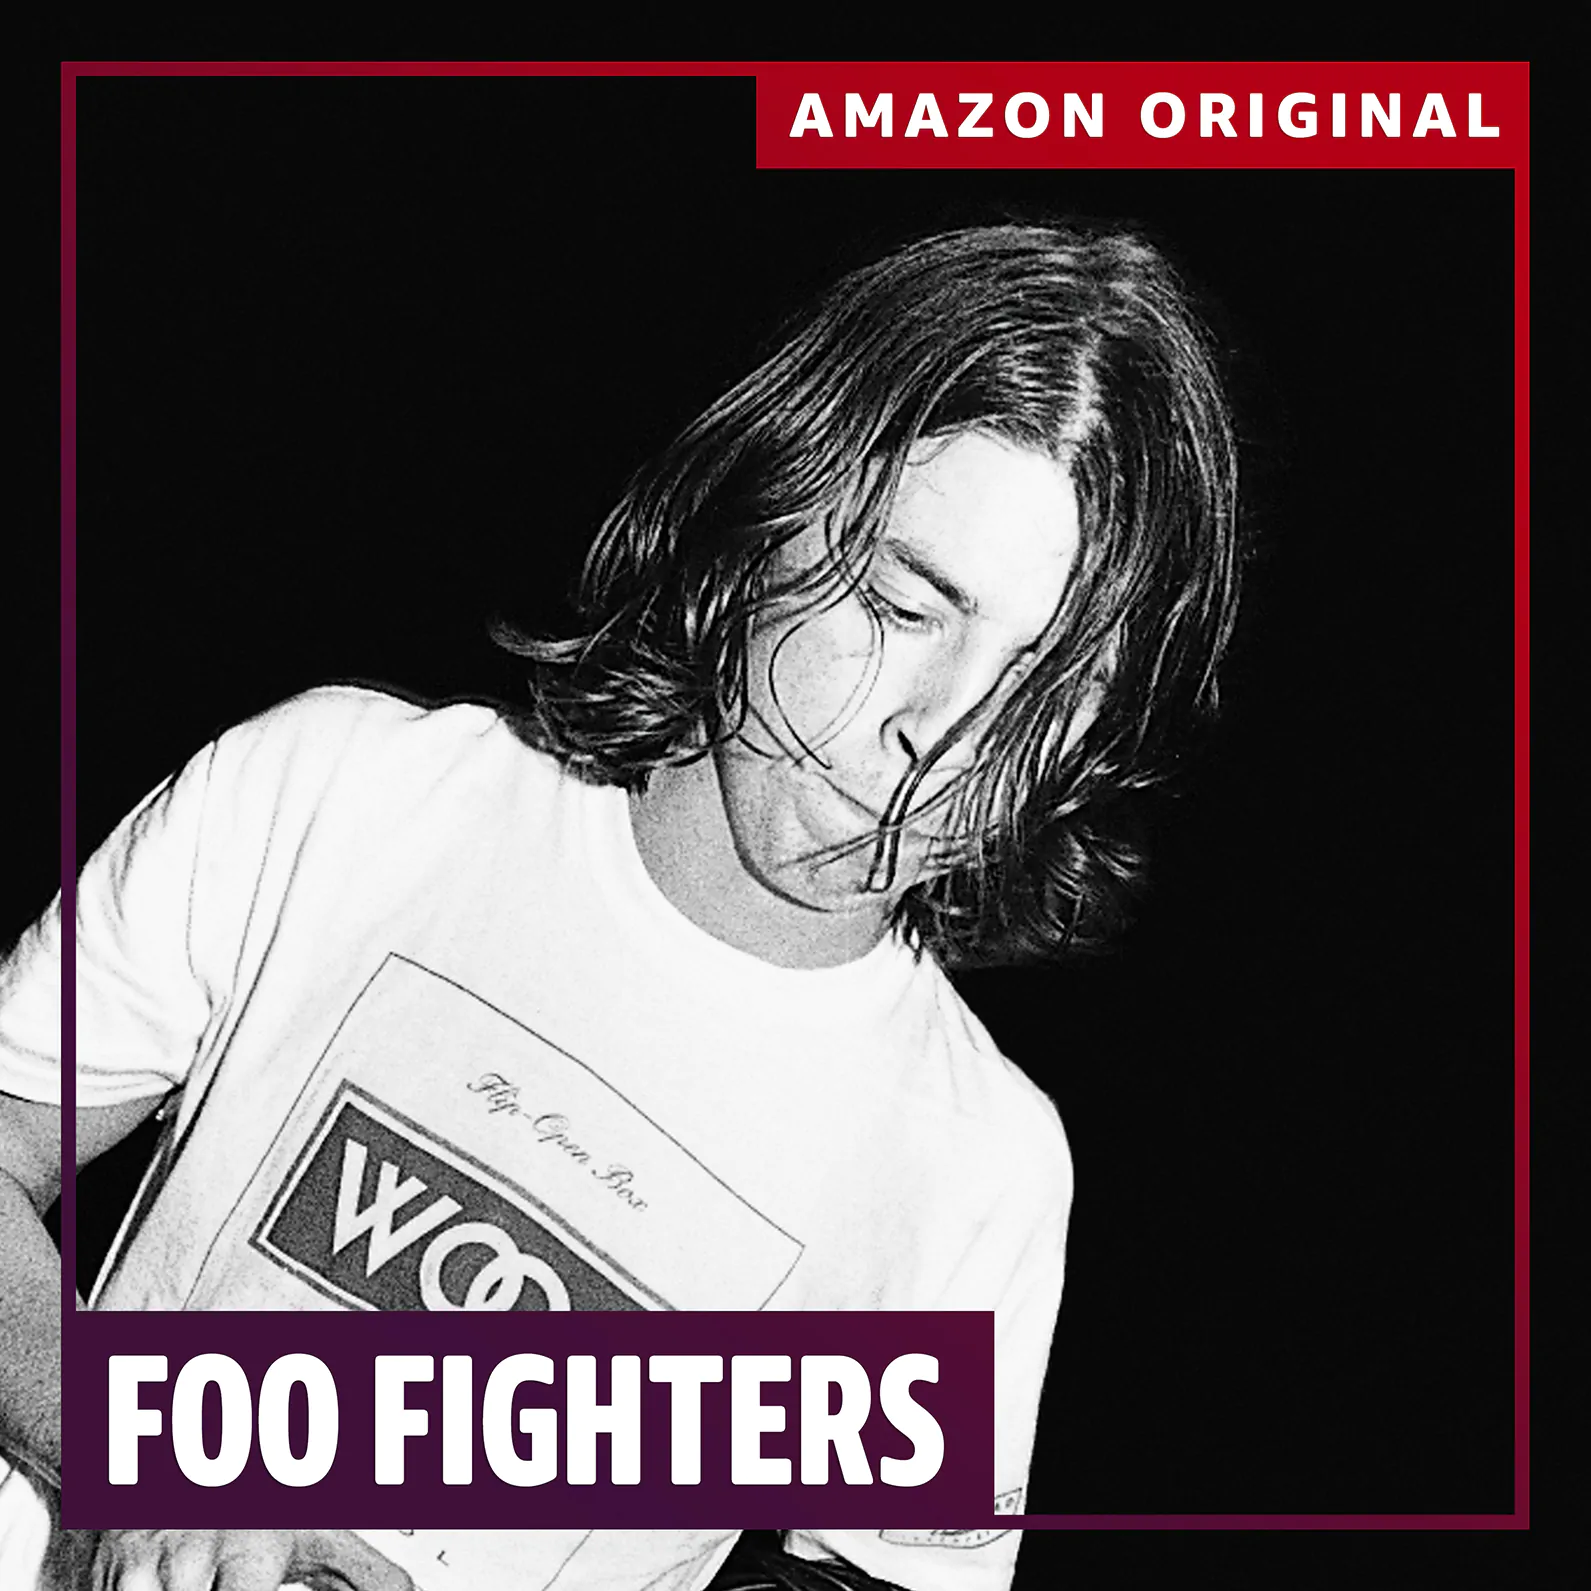 FOO FIGHTERS Release Amazon Original EP – Live On the Radio 1996